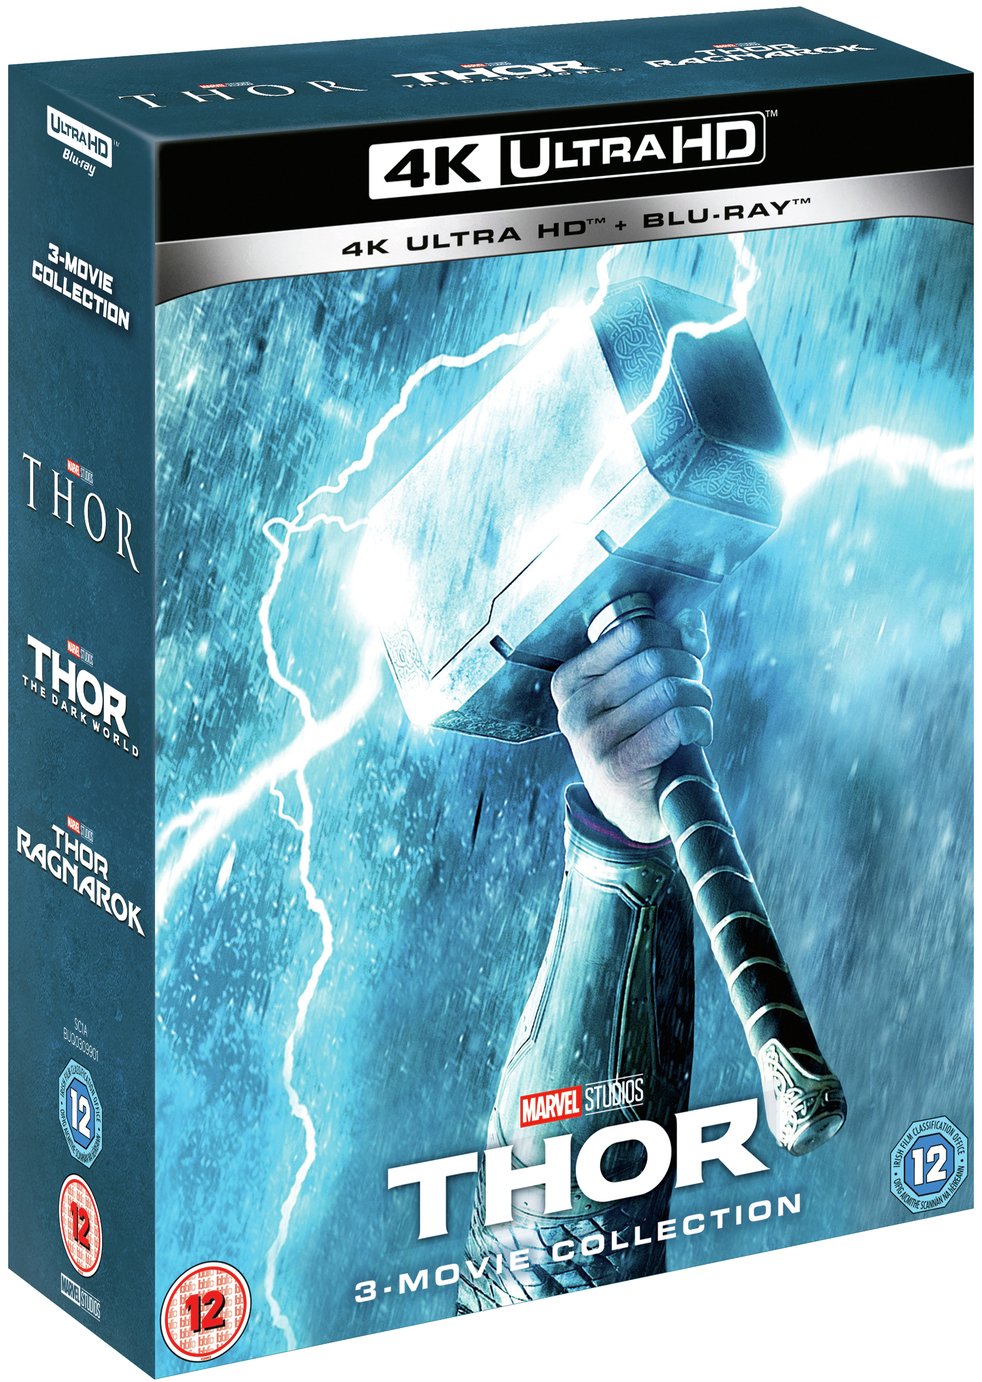 Marvel's Thor Trilogy 4K UHD Blu-Ray Box Set